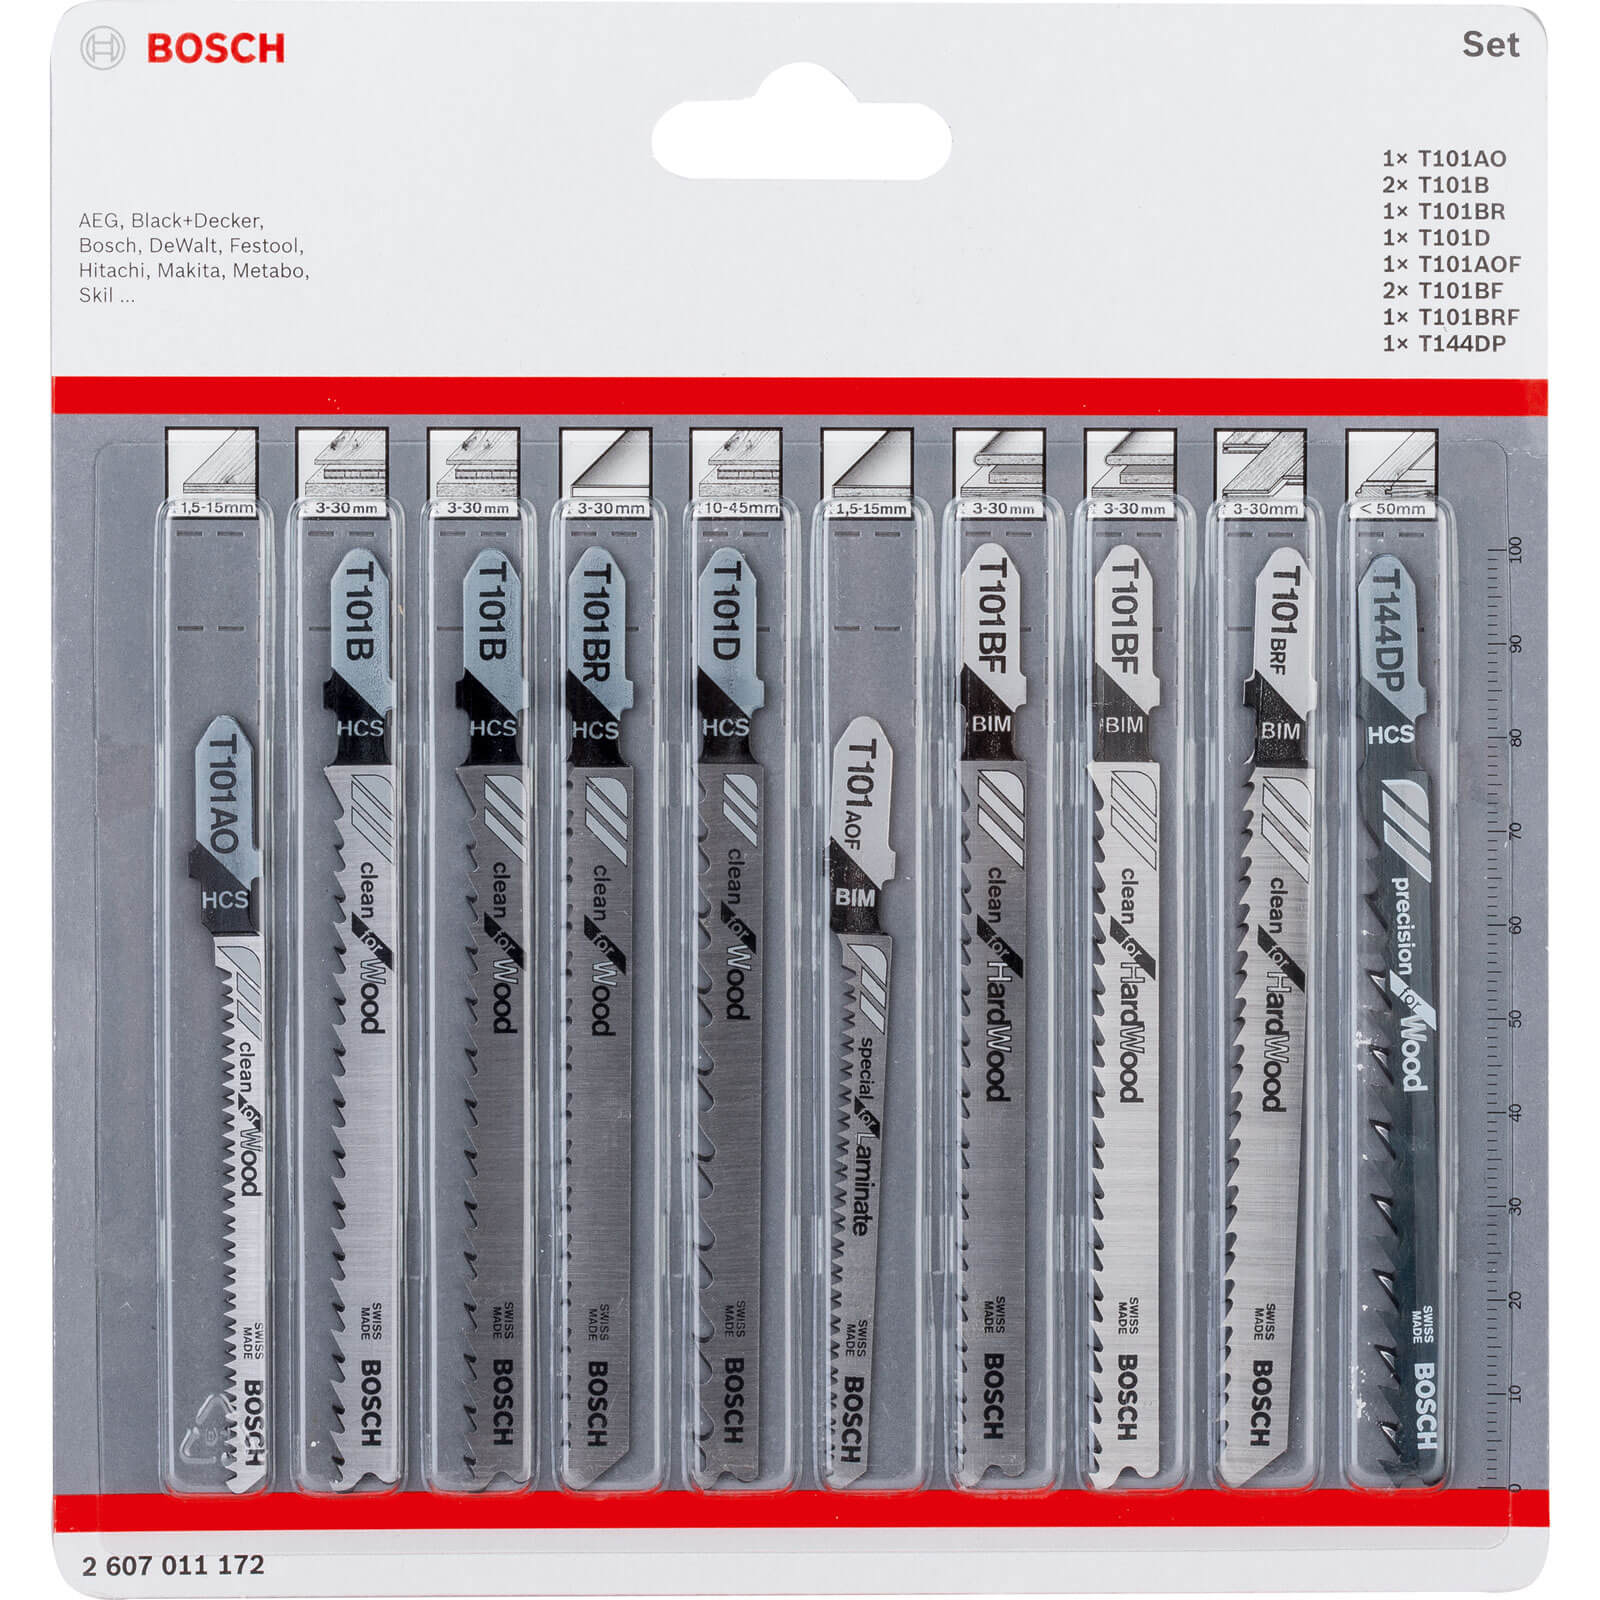 Photos - Power Tool Accessory Bosch 10 Piece Wood Cutting Jigsaw Blade Set 2607011172 